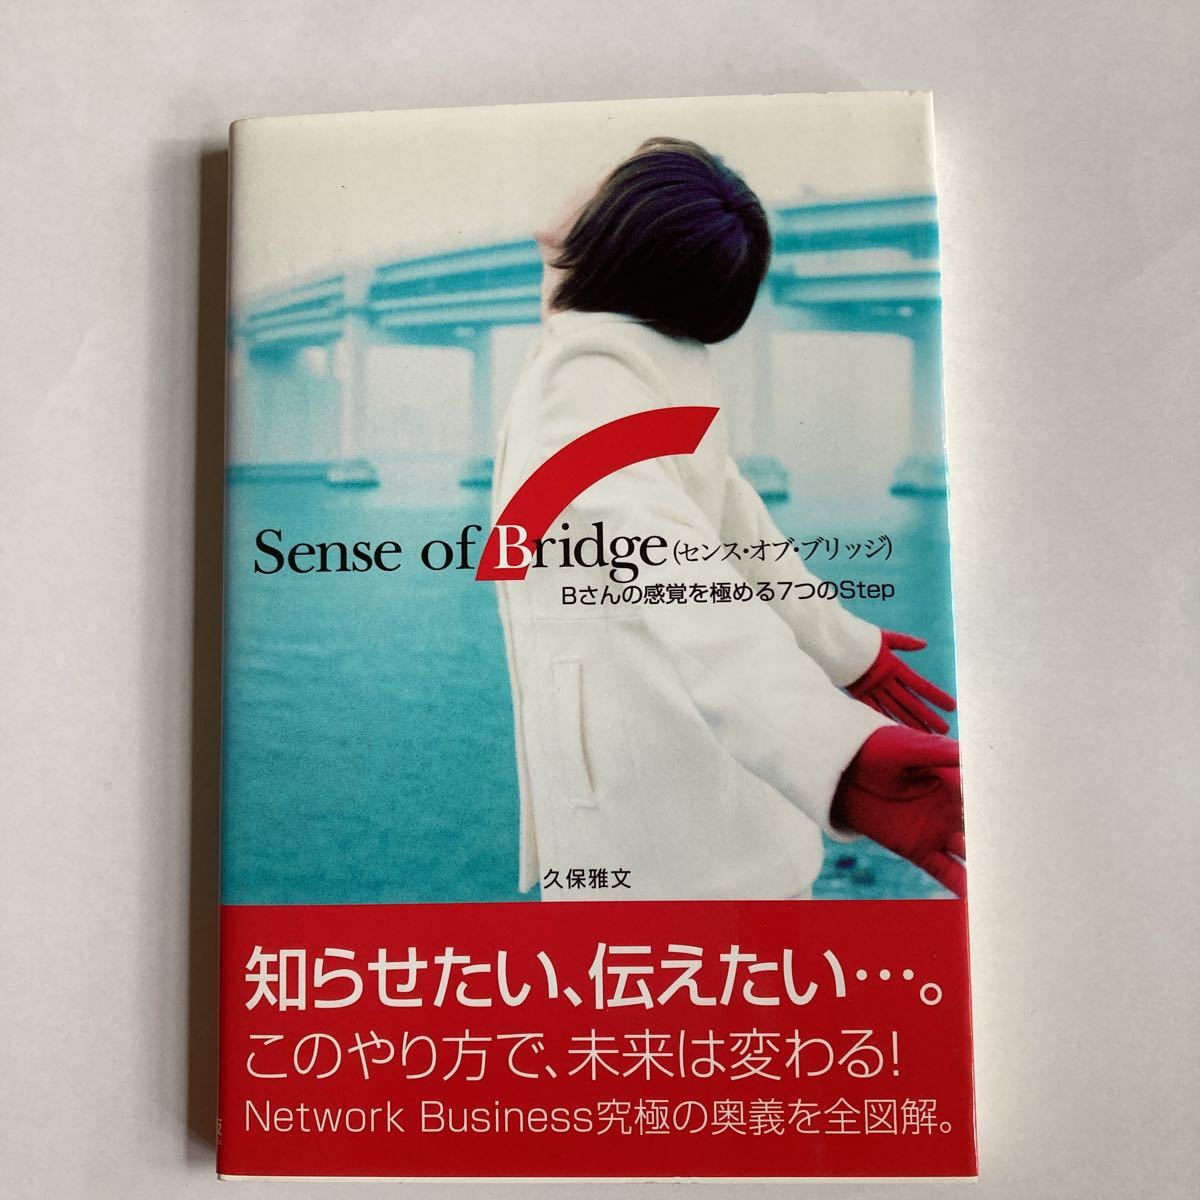 Sense of bridge Bさんの感覚を極める7つのStep 久保雅文/古本